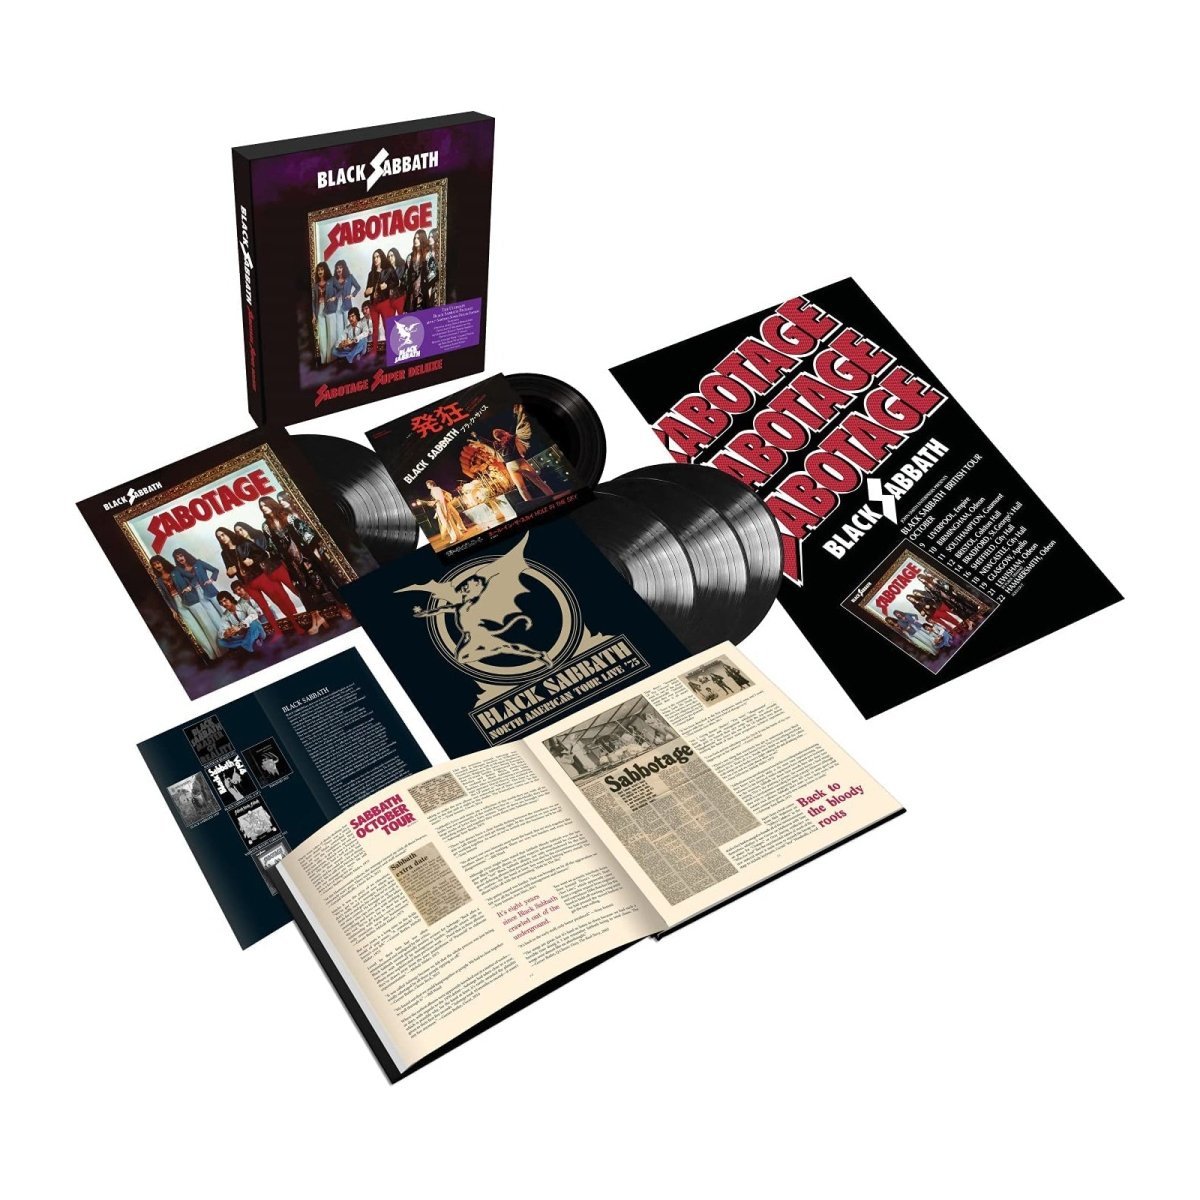 Black Sabbath - Sabotage Super Deluxe 7" Box Set Vinyl